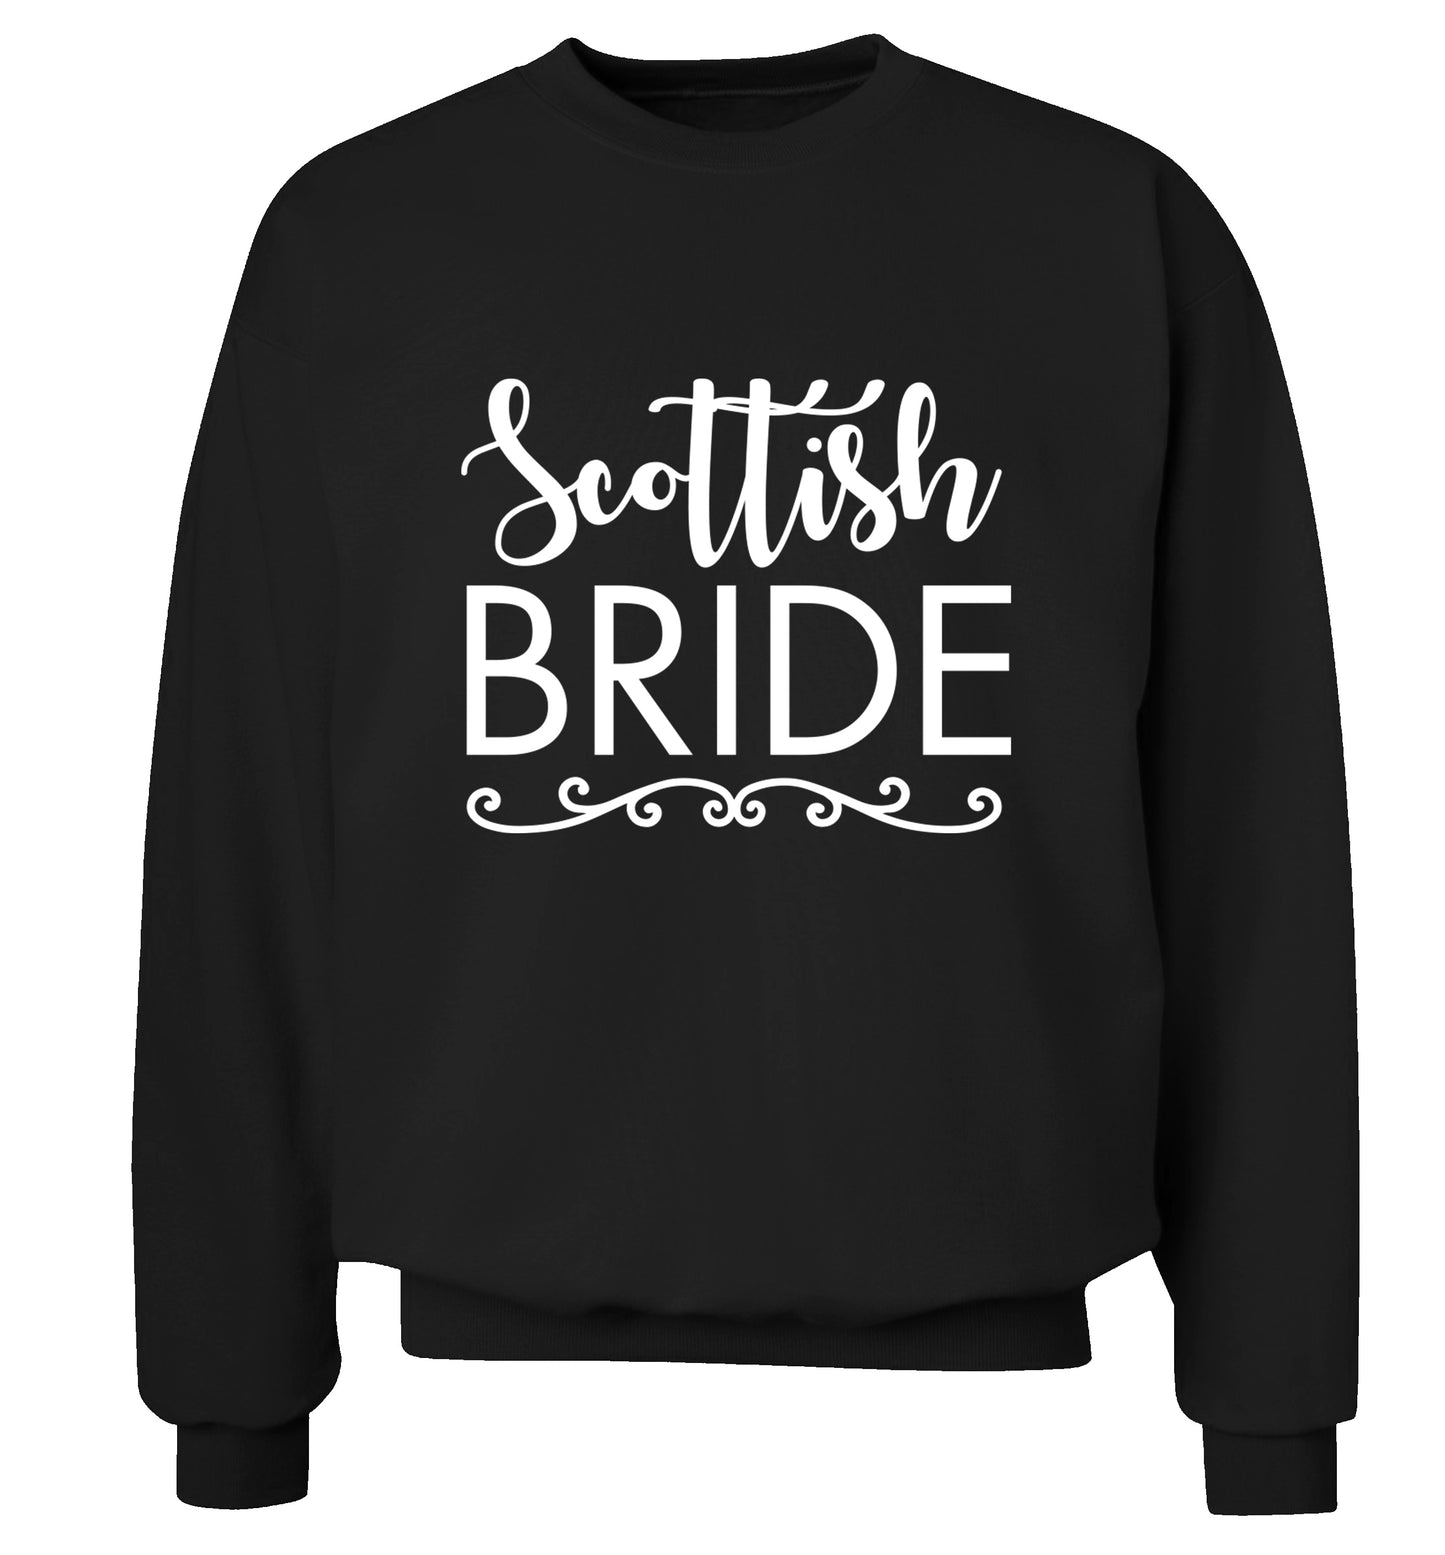 Scottish Bride Adult's unisex black Sweater 2XL